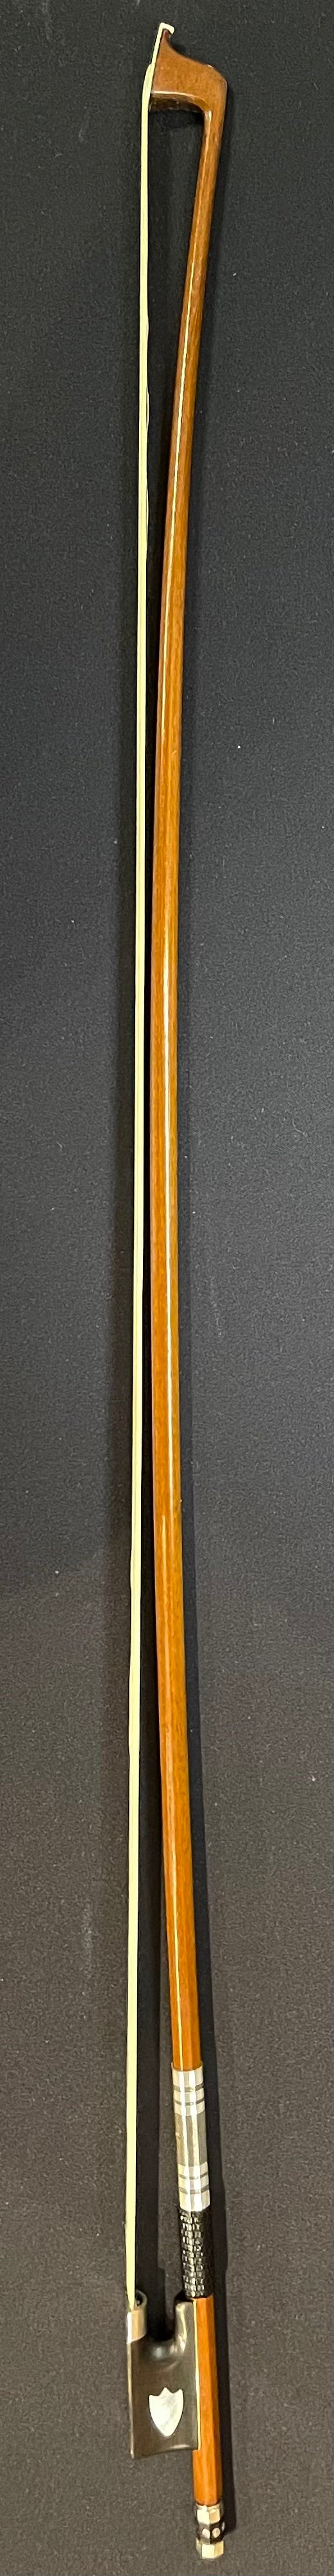 4/4 Violin Bow - MEEB Wood Model